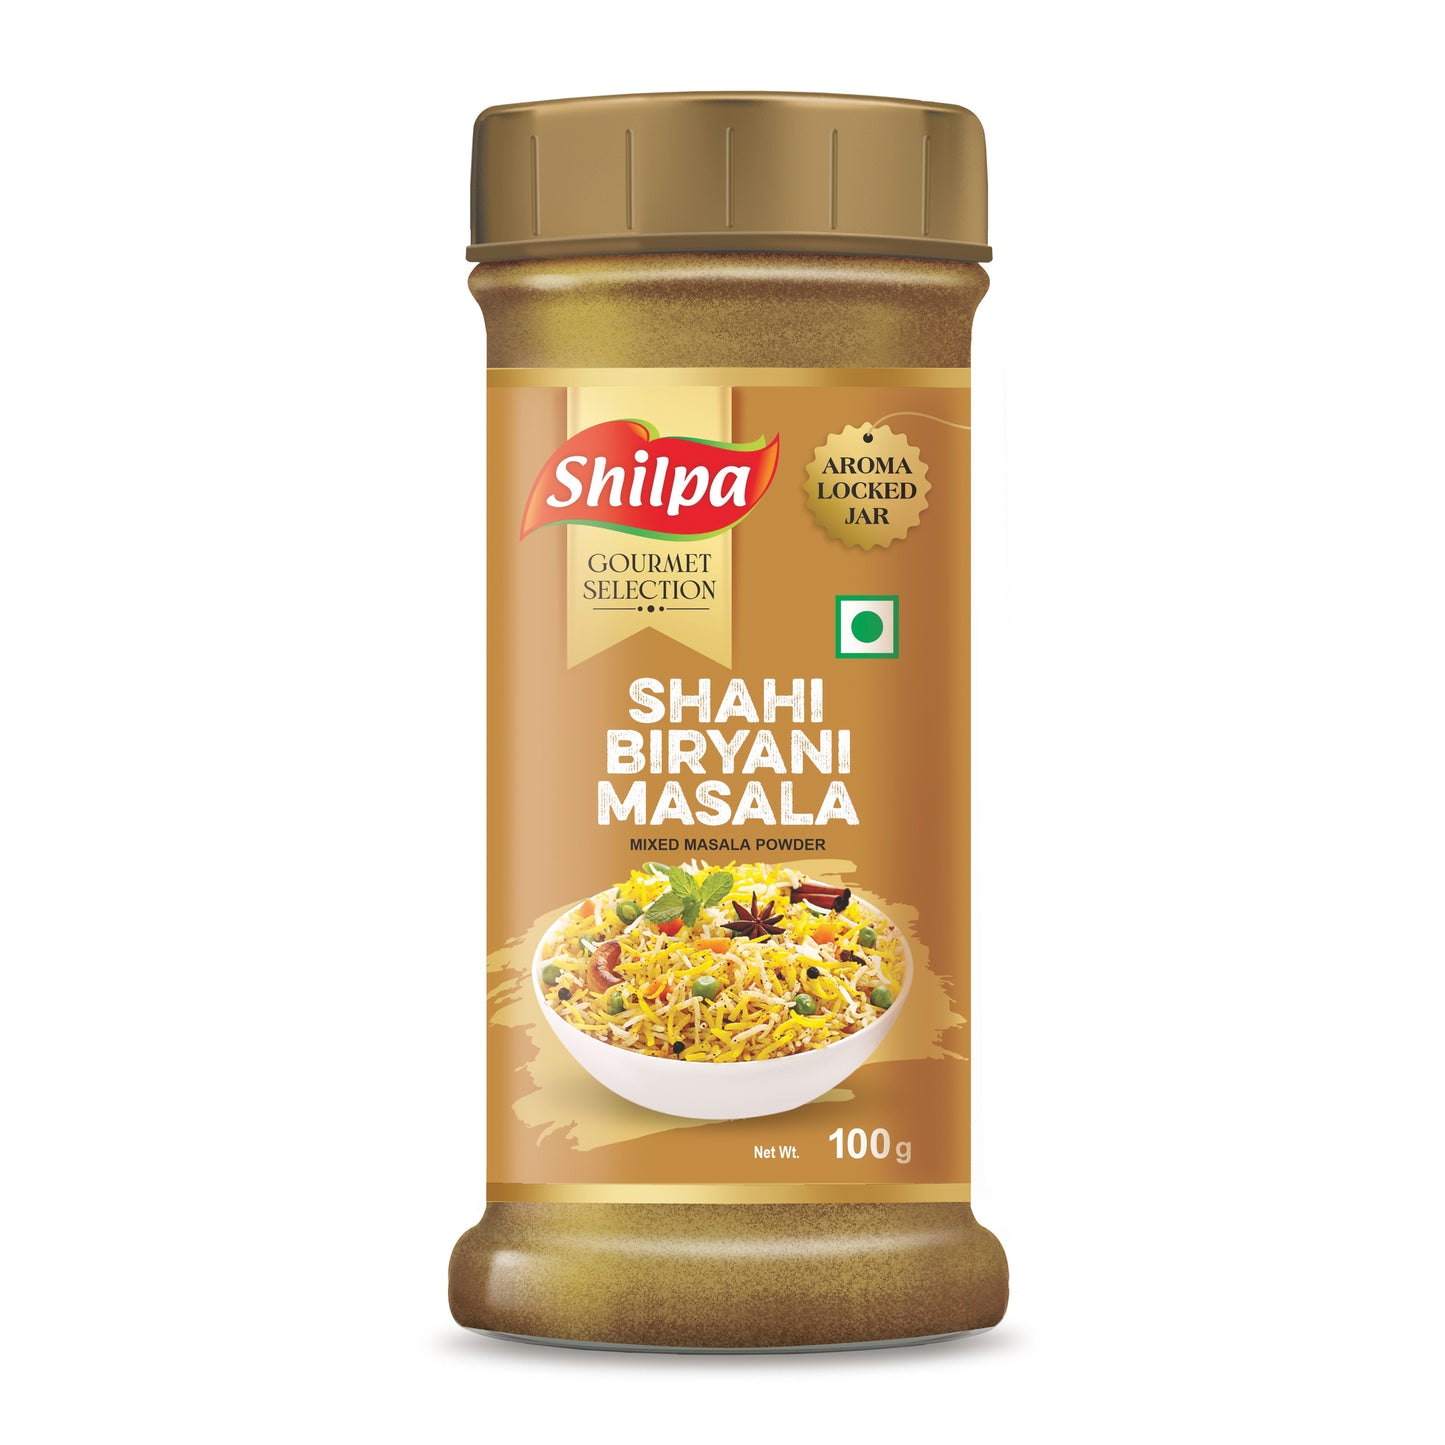 Shilpa Combo Pack of Meat Masala Powder (100g) & Biryani Masala Powder (100g) Jar